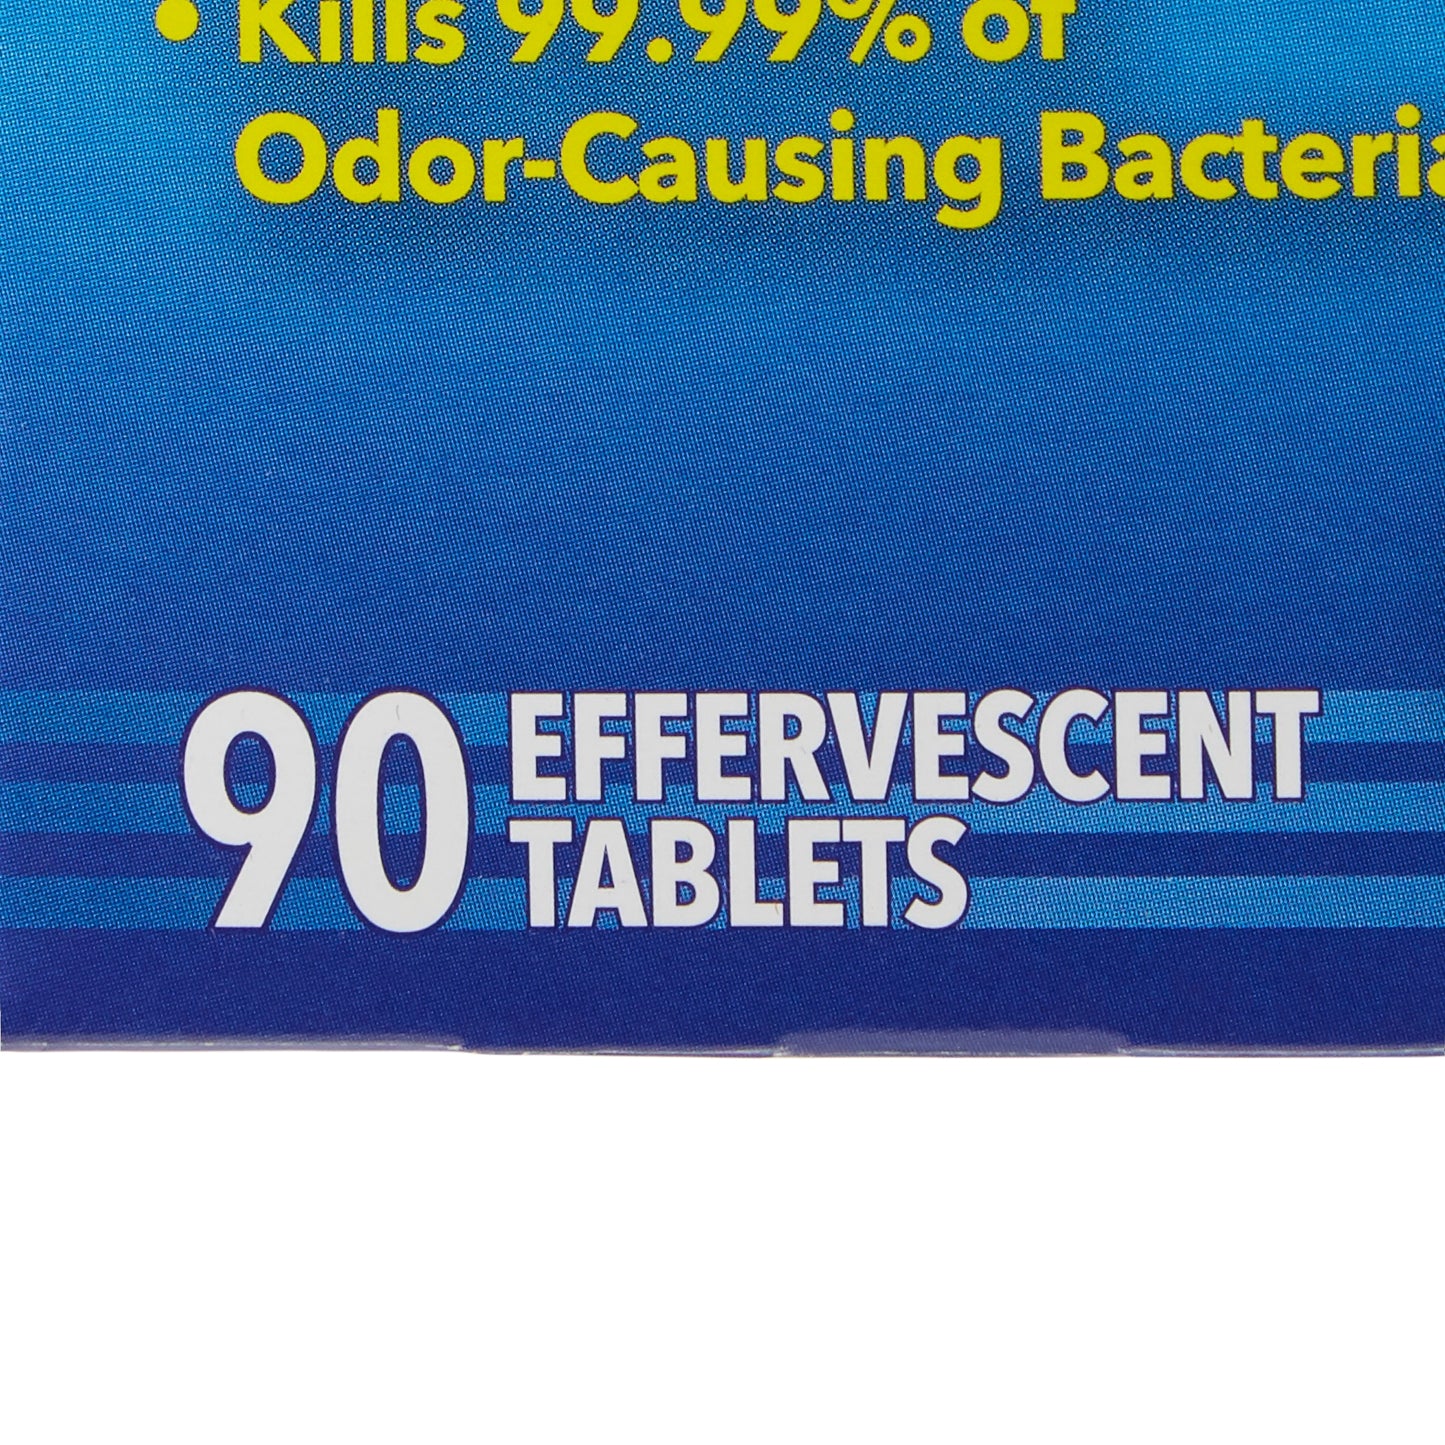 freshmint® Denture Cleanser Anti-Bacterial Tablets